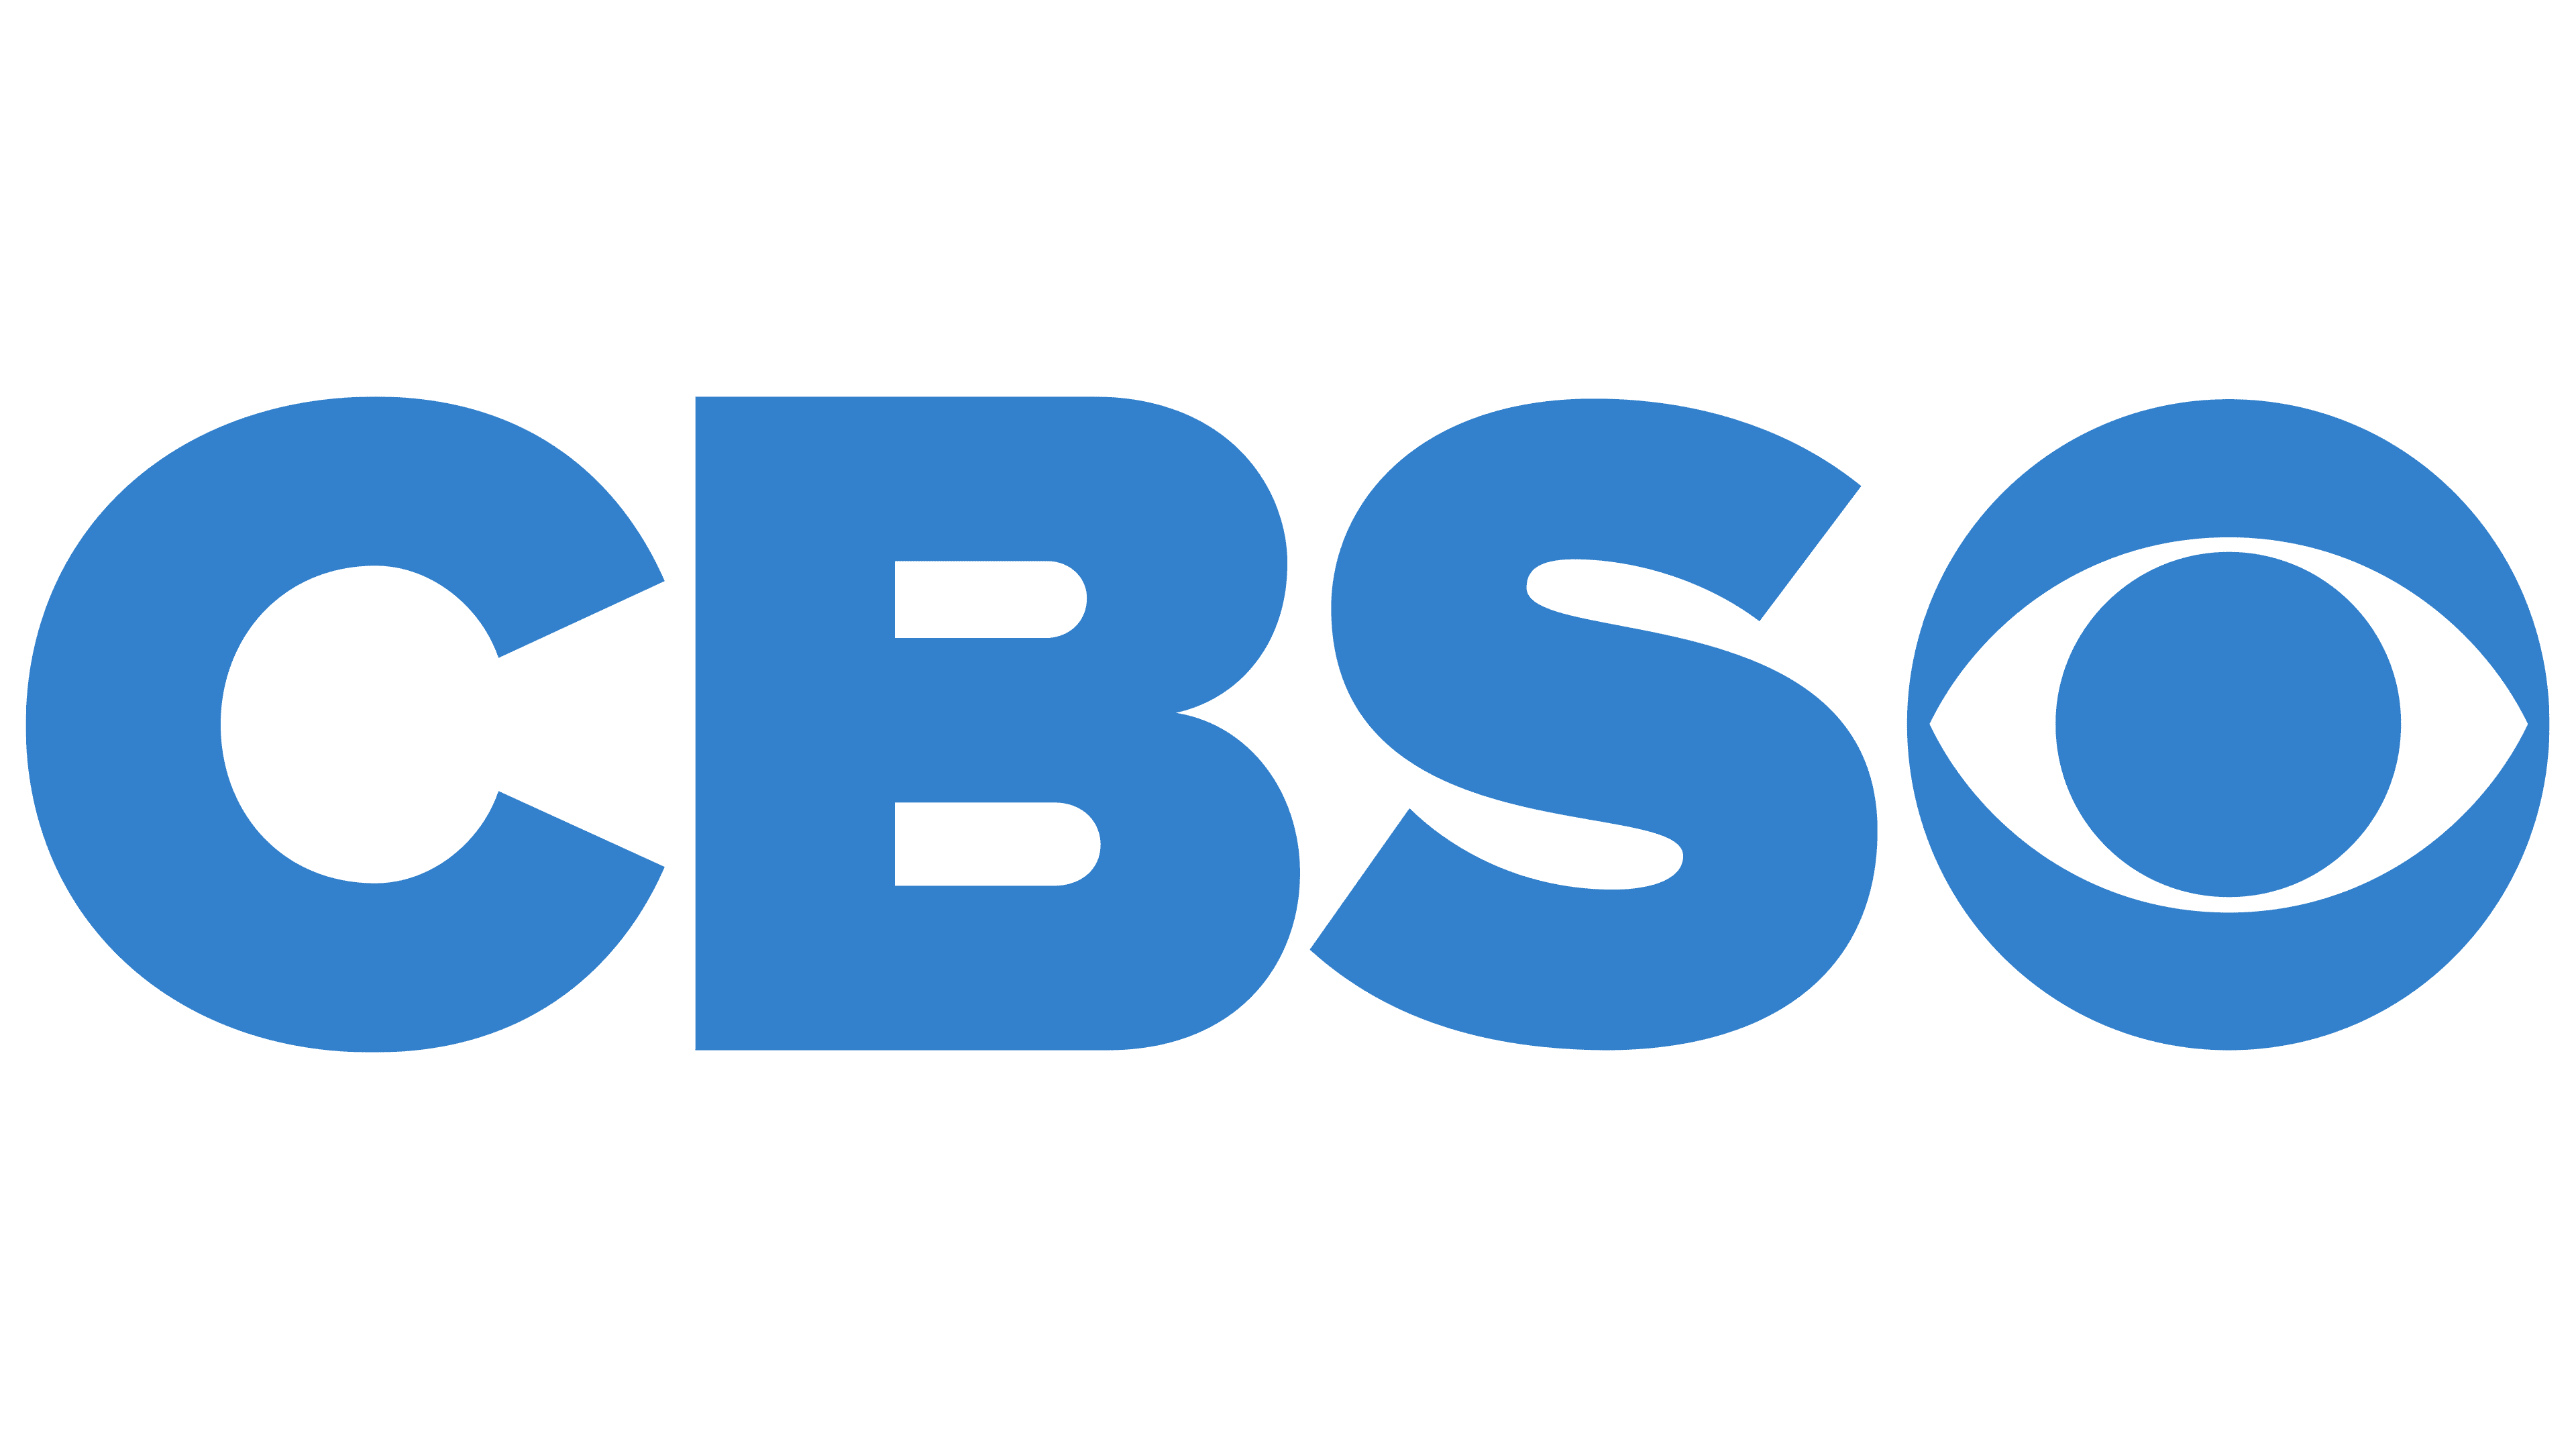 Cbs Logo PNG Image